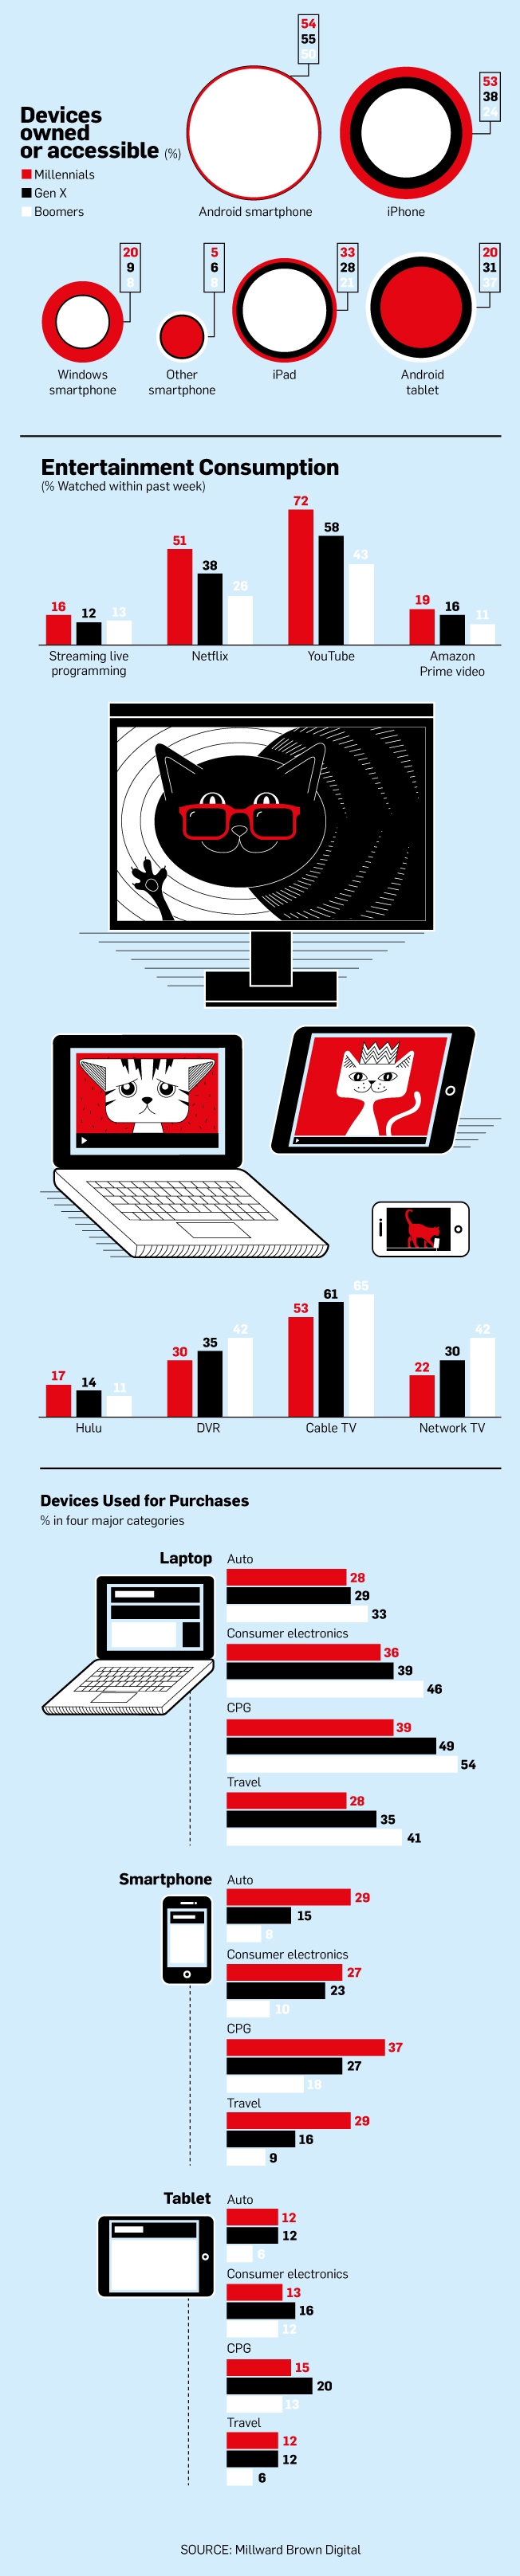 marketing-movil-millennials-consumo-infografia-reasonwhy.es_.jpg